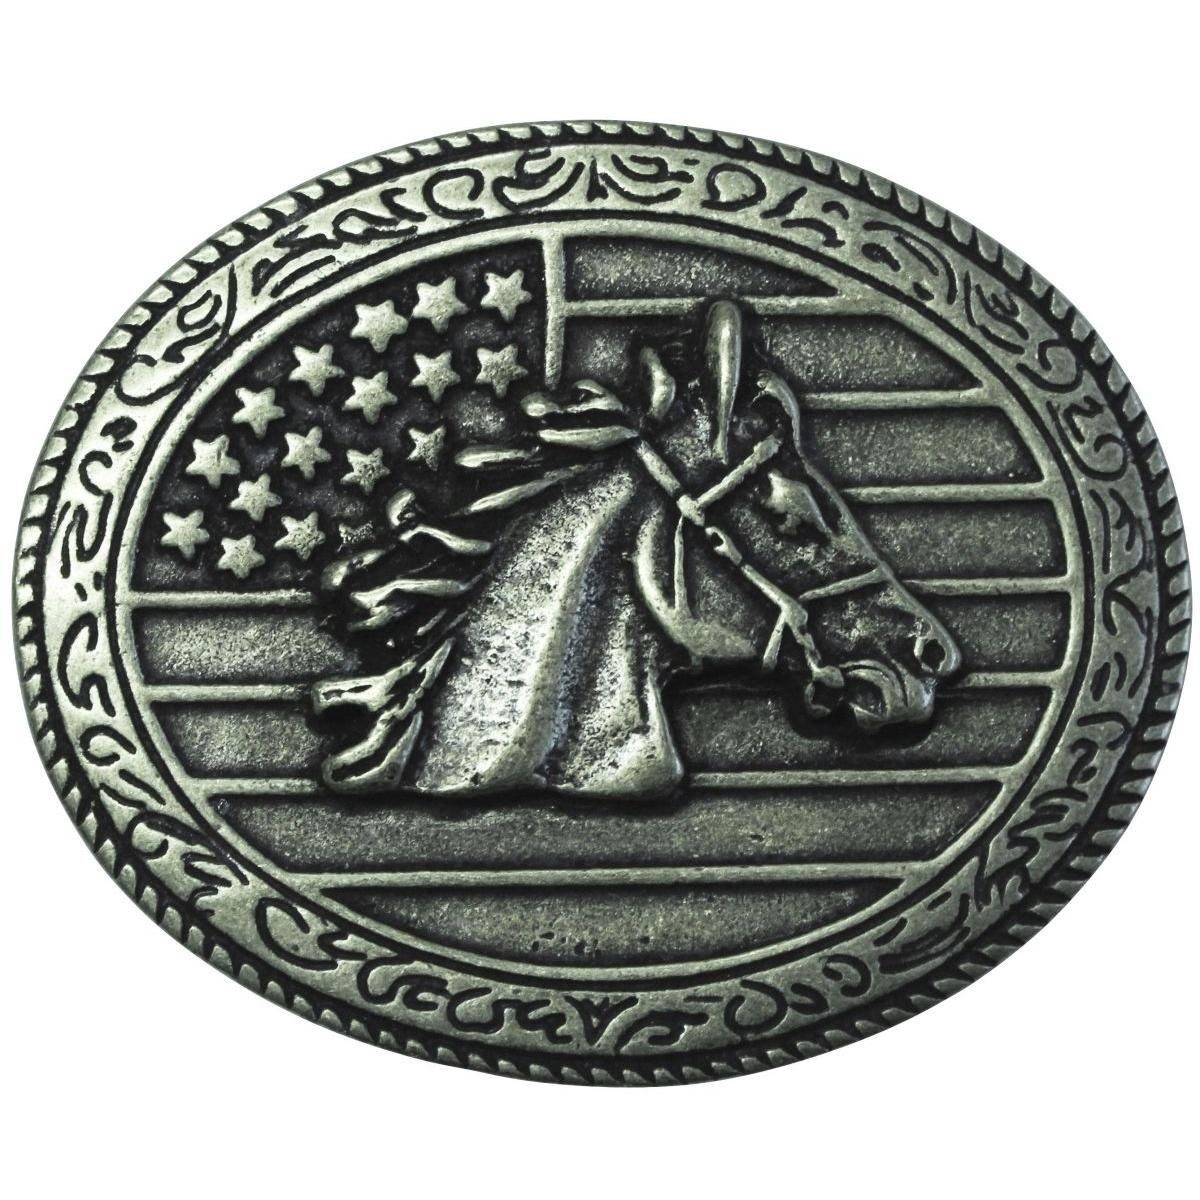 BELTINGER Gürtelschnalle Pferdekopf USA 4,0 cm - Buckle Wechselschließe Gürtelschließe 40mm - f Altsilber